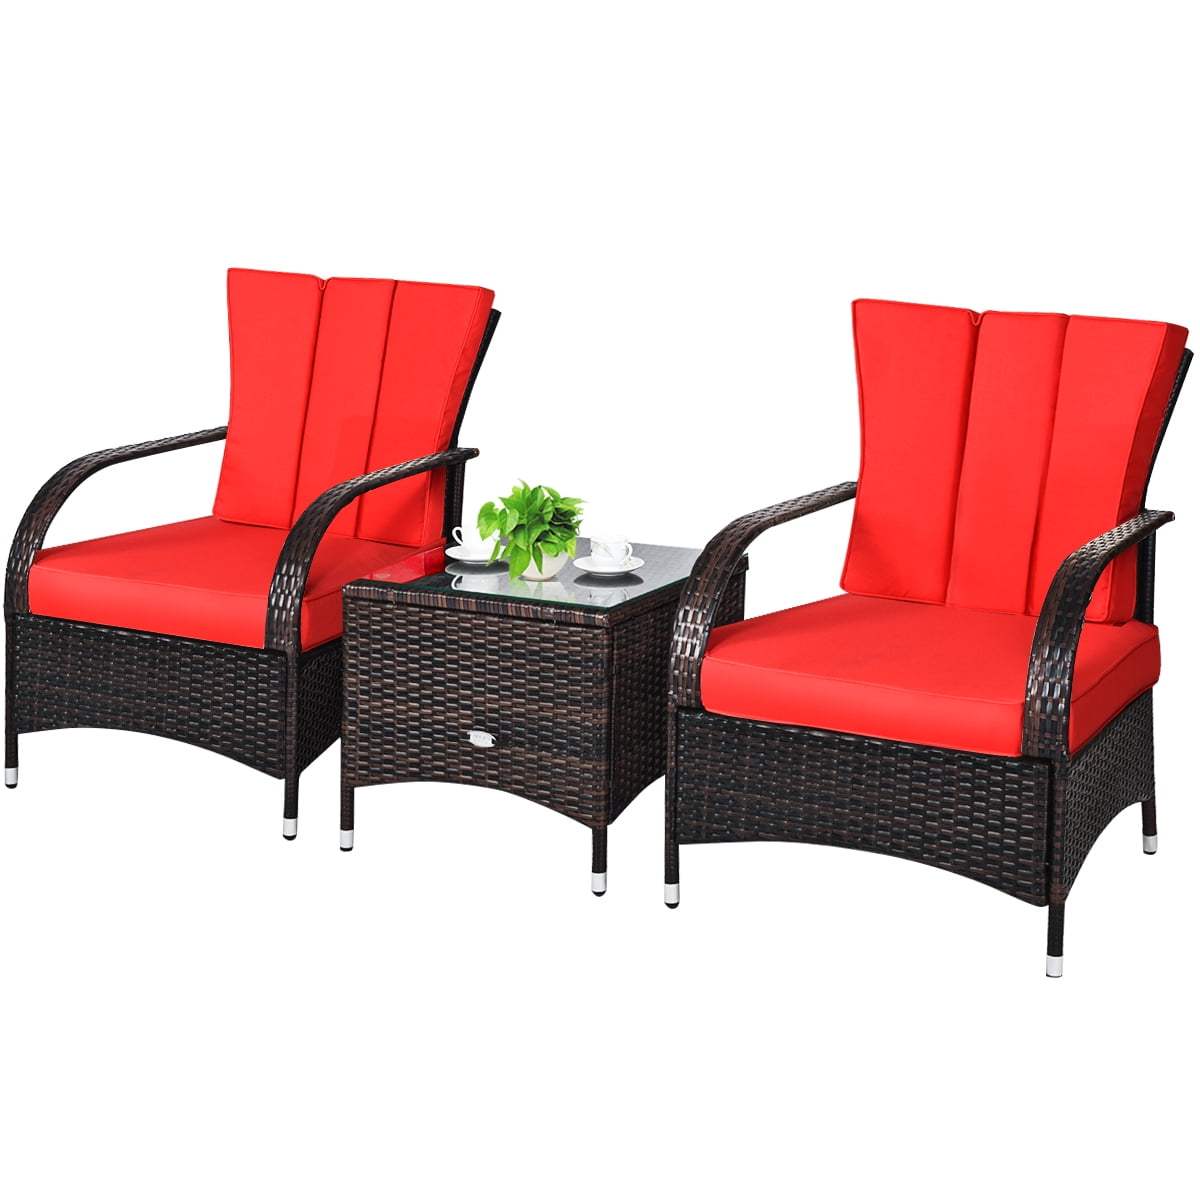 Topbuy Outdoor Rattan Furniture Wicker Conversation Chair 